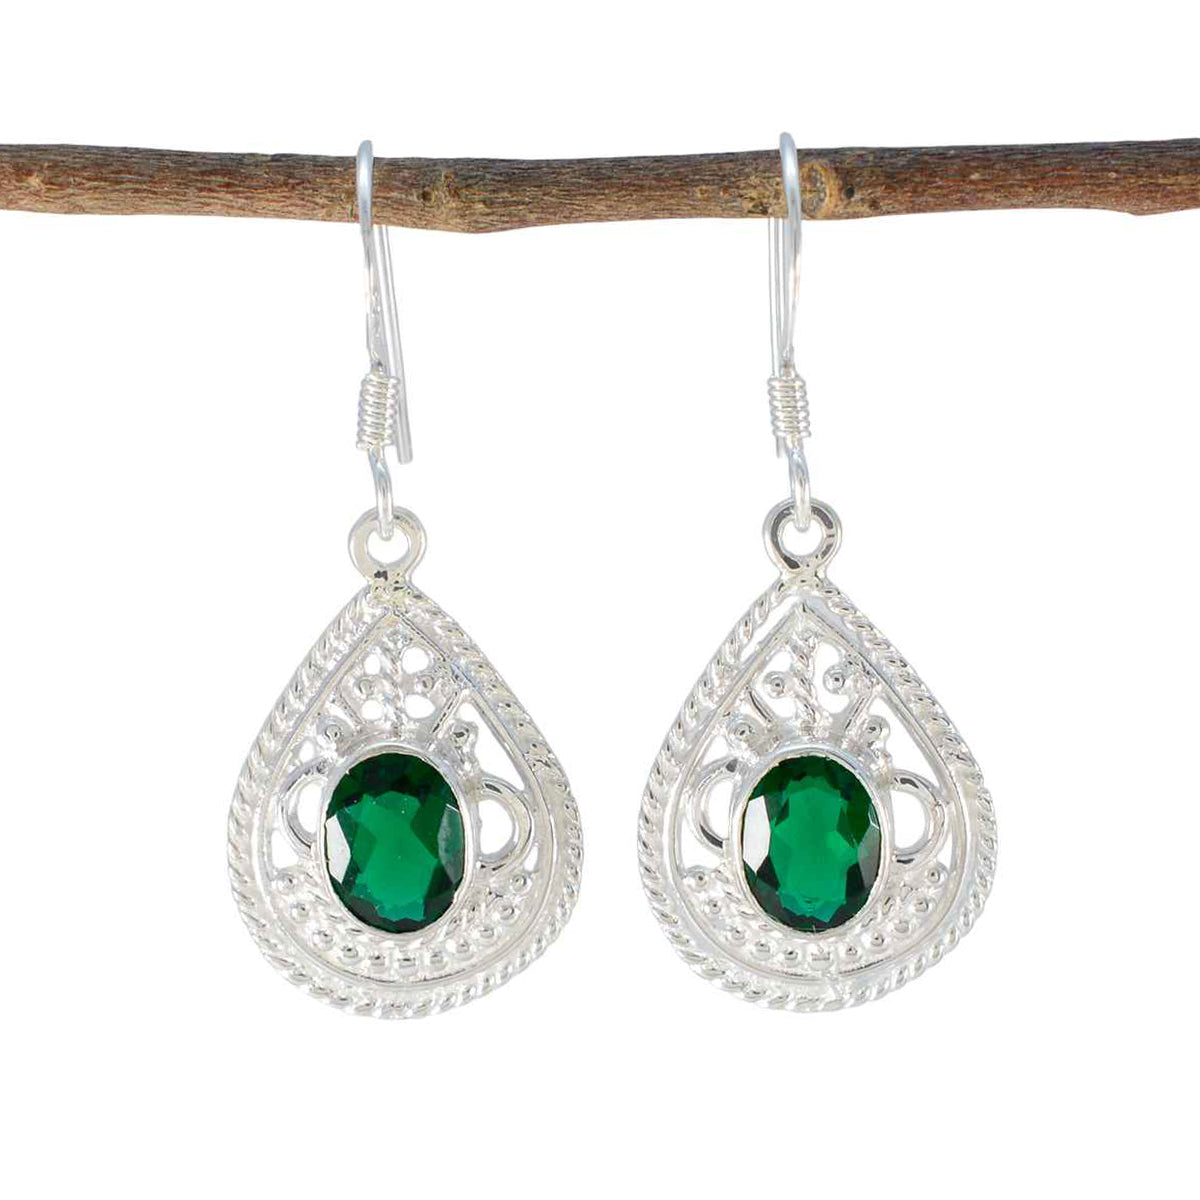 Riyo Fanciable Sterling Silber Ohrring für Damen, Smaragd-CZ-Ohrring, Lünettenfassung, grüner Ohrring, baumelnder Ohrring